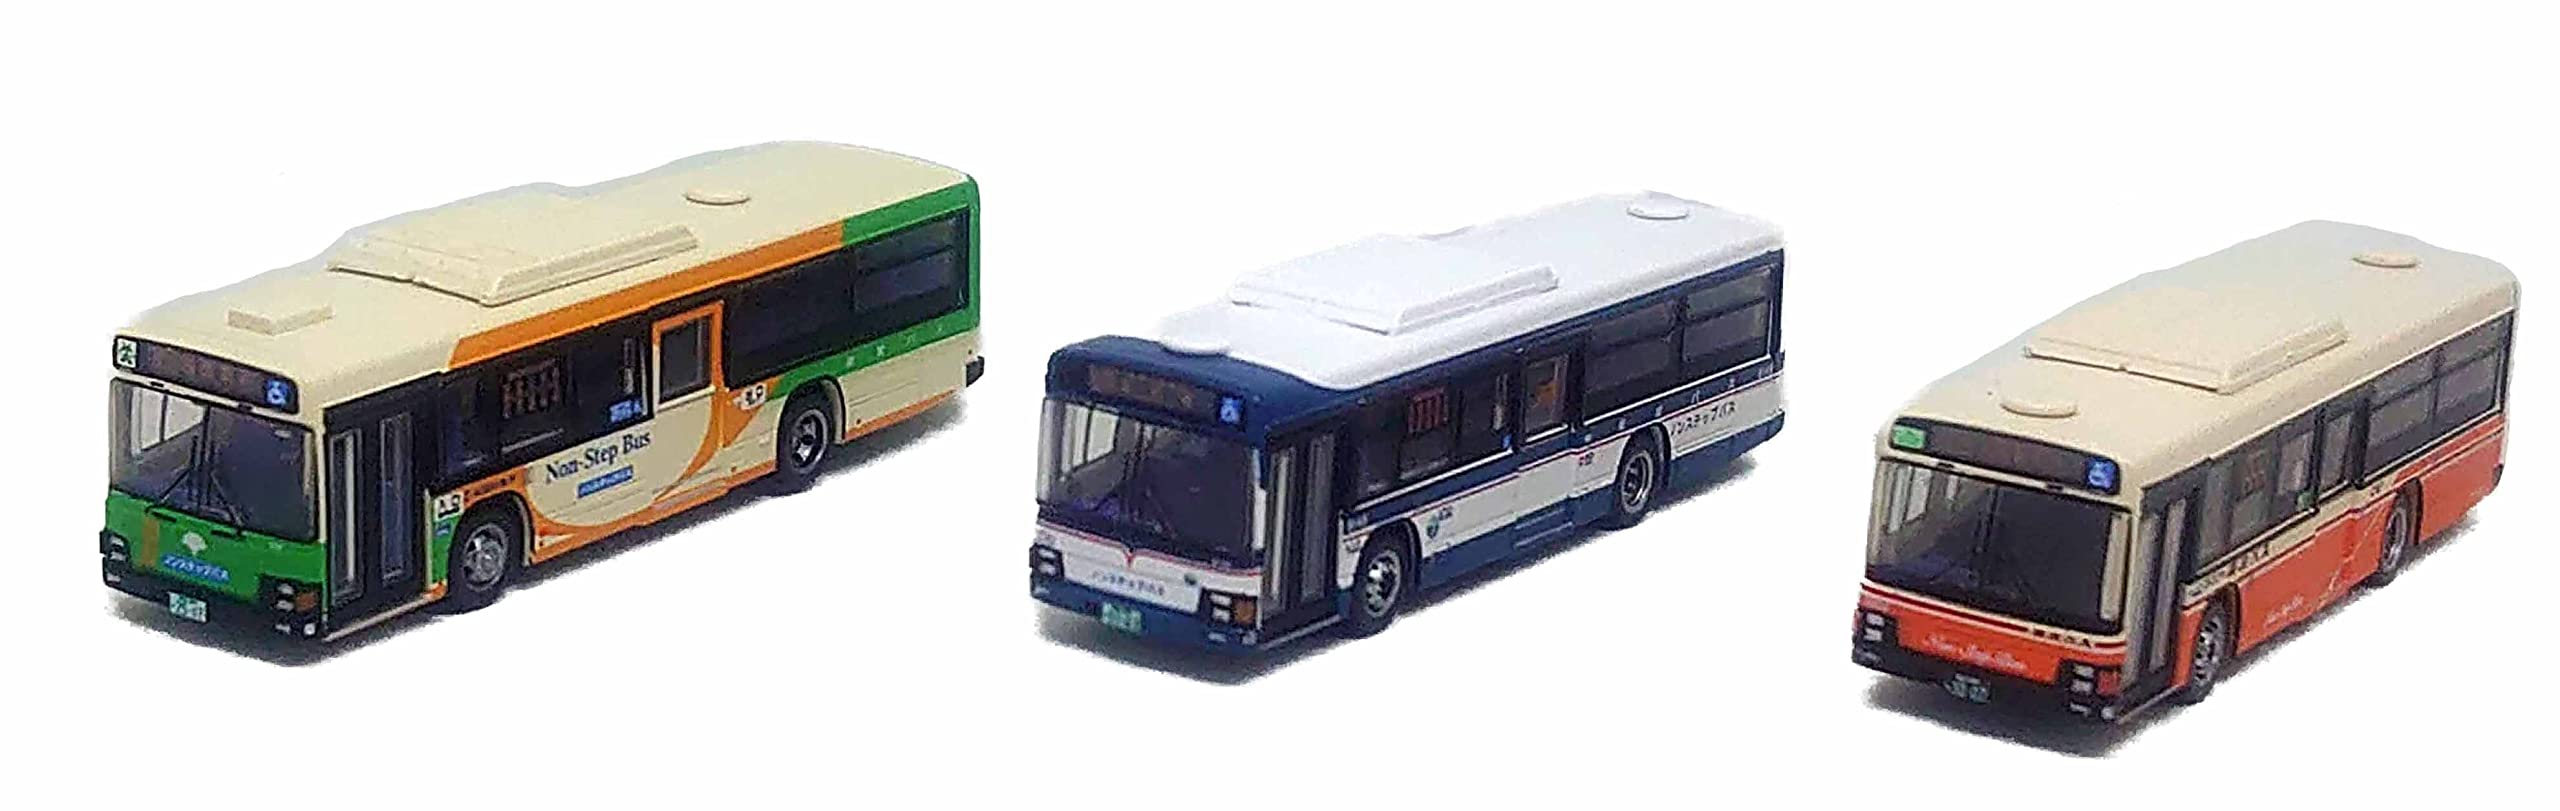 Tomytec Bus Collection 3-Piece Set Running in Katsushika A Series